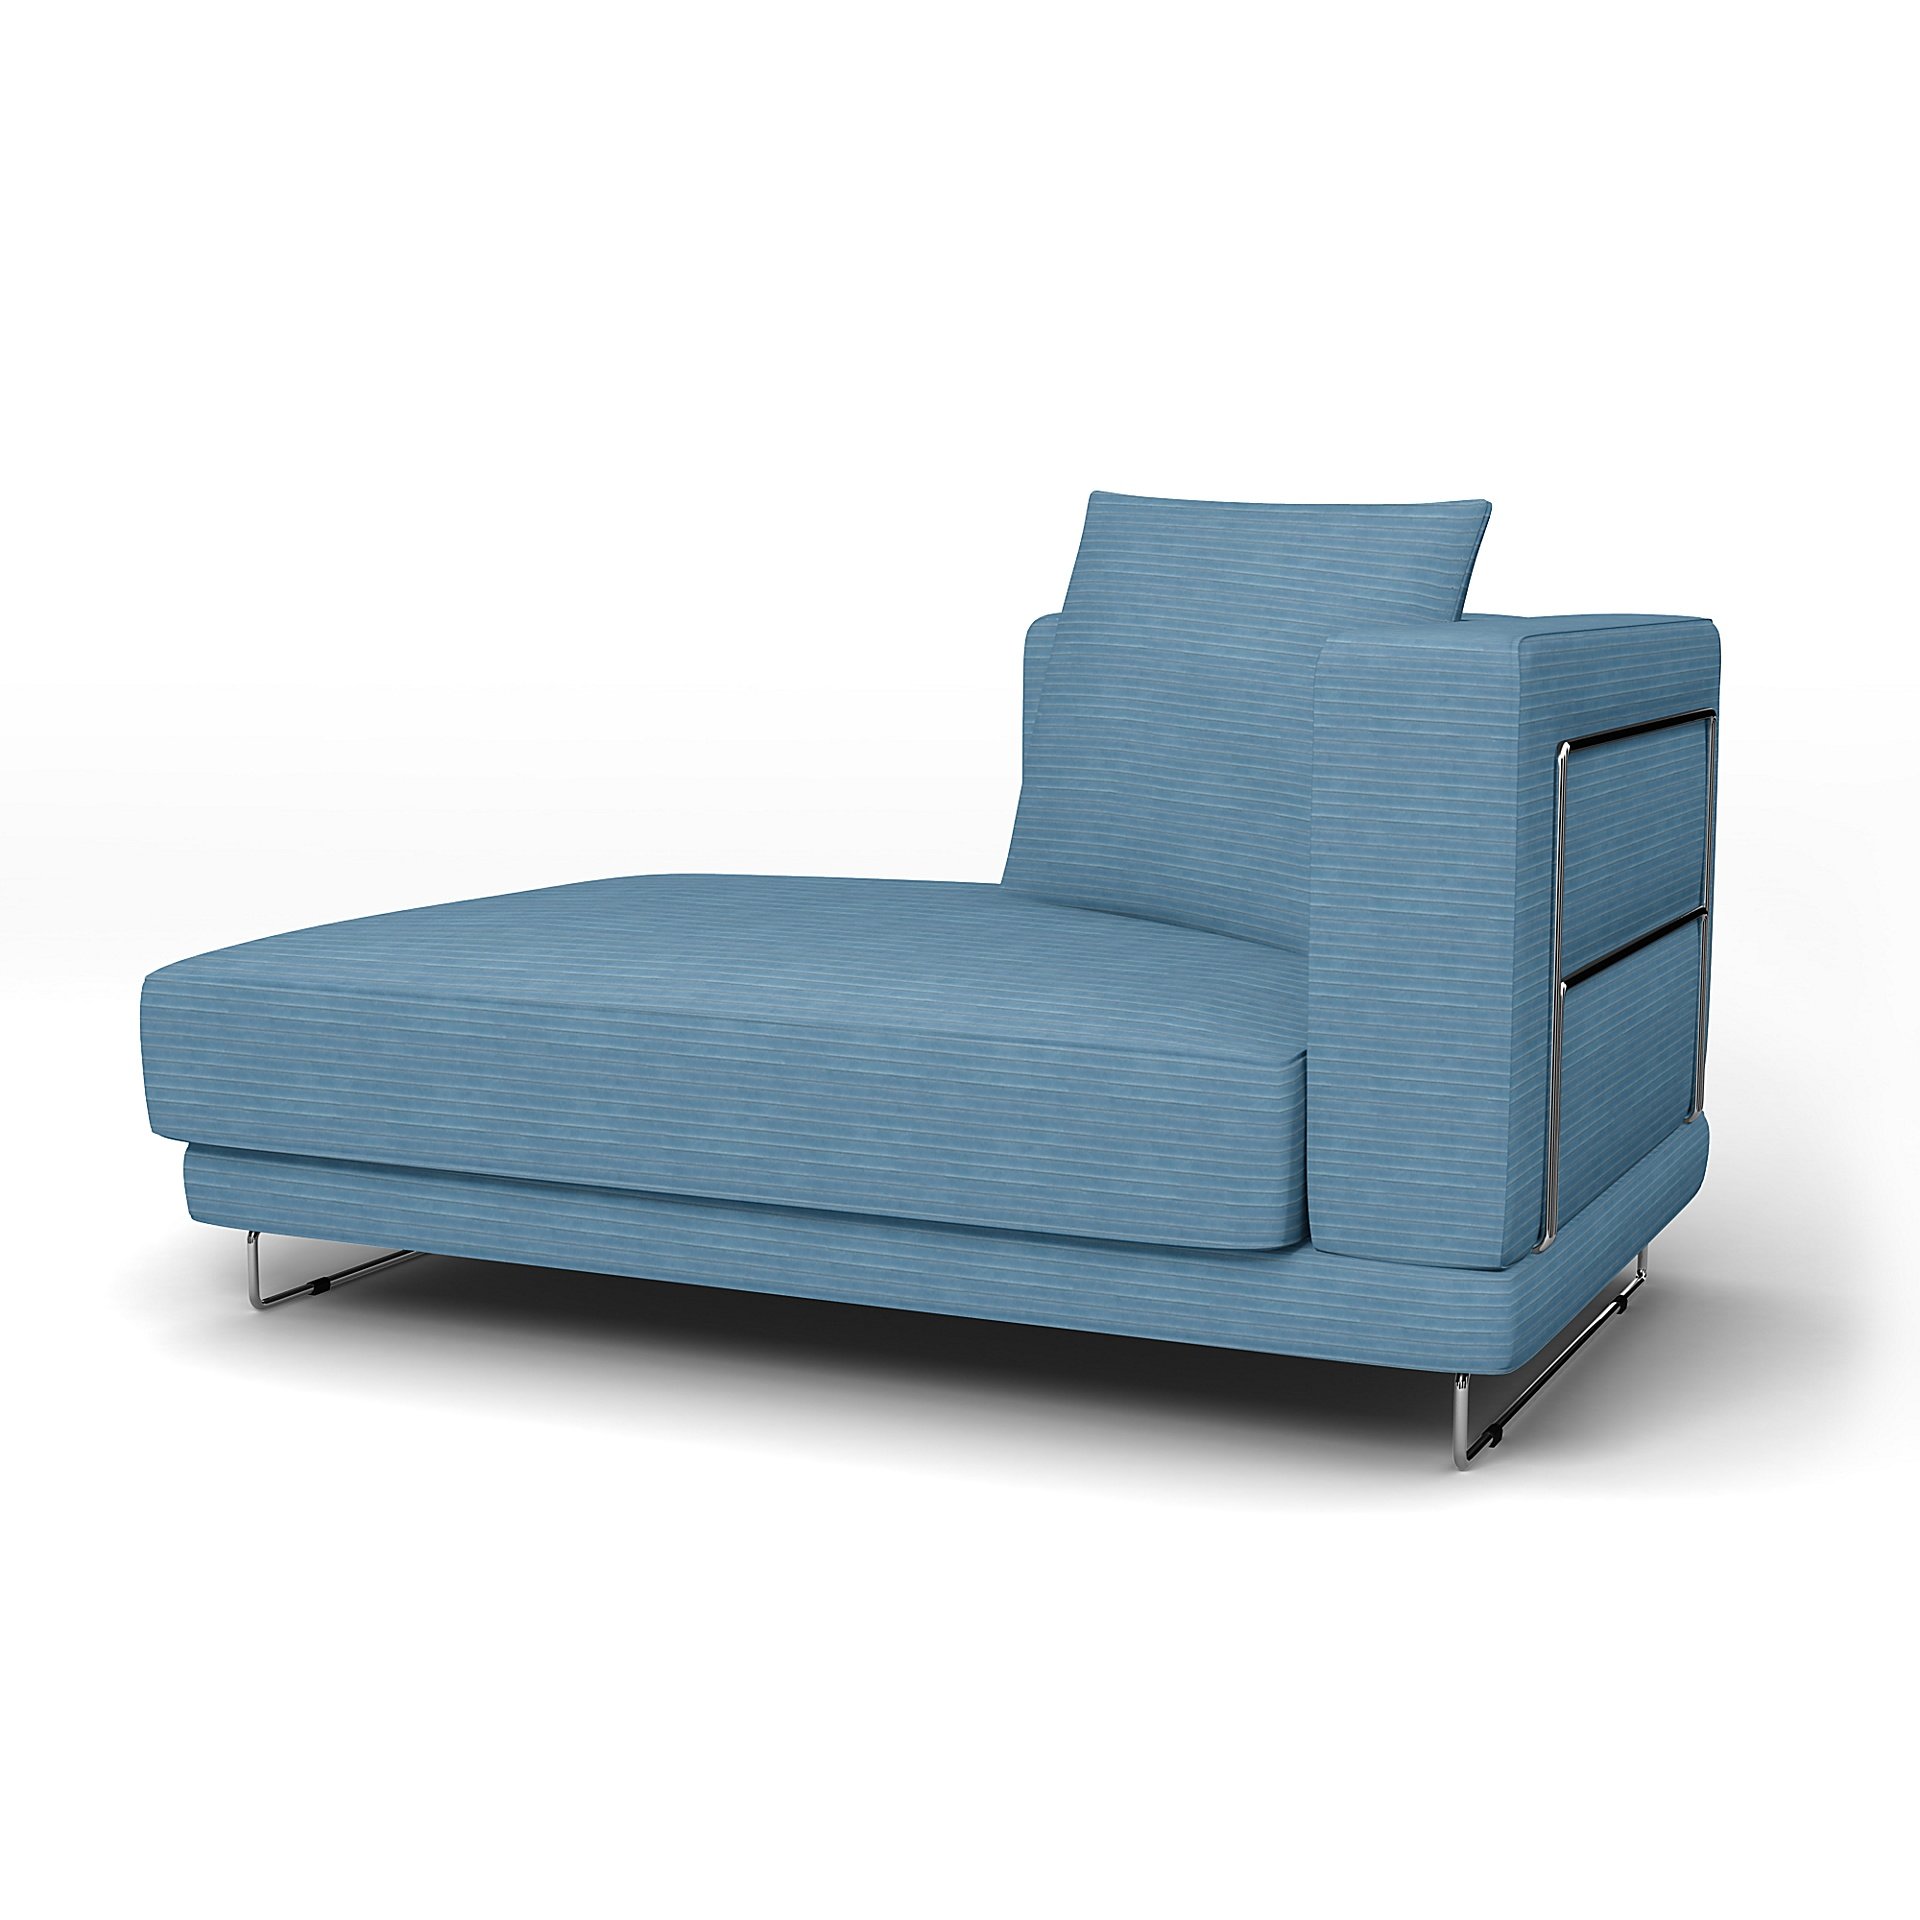 IKEA - Tylosand Chaise with Left Armrest Cover, Sky Blue, Corduroy - Bemz